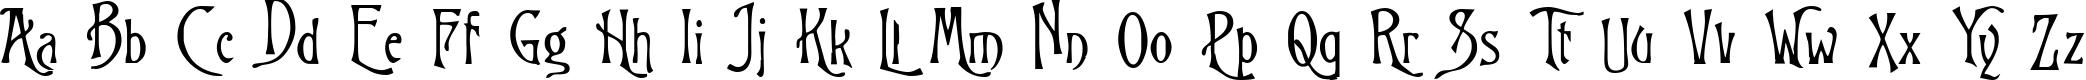 Пример написания английского алфавита шрифтом Burton's Nightmare